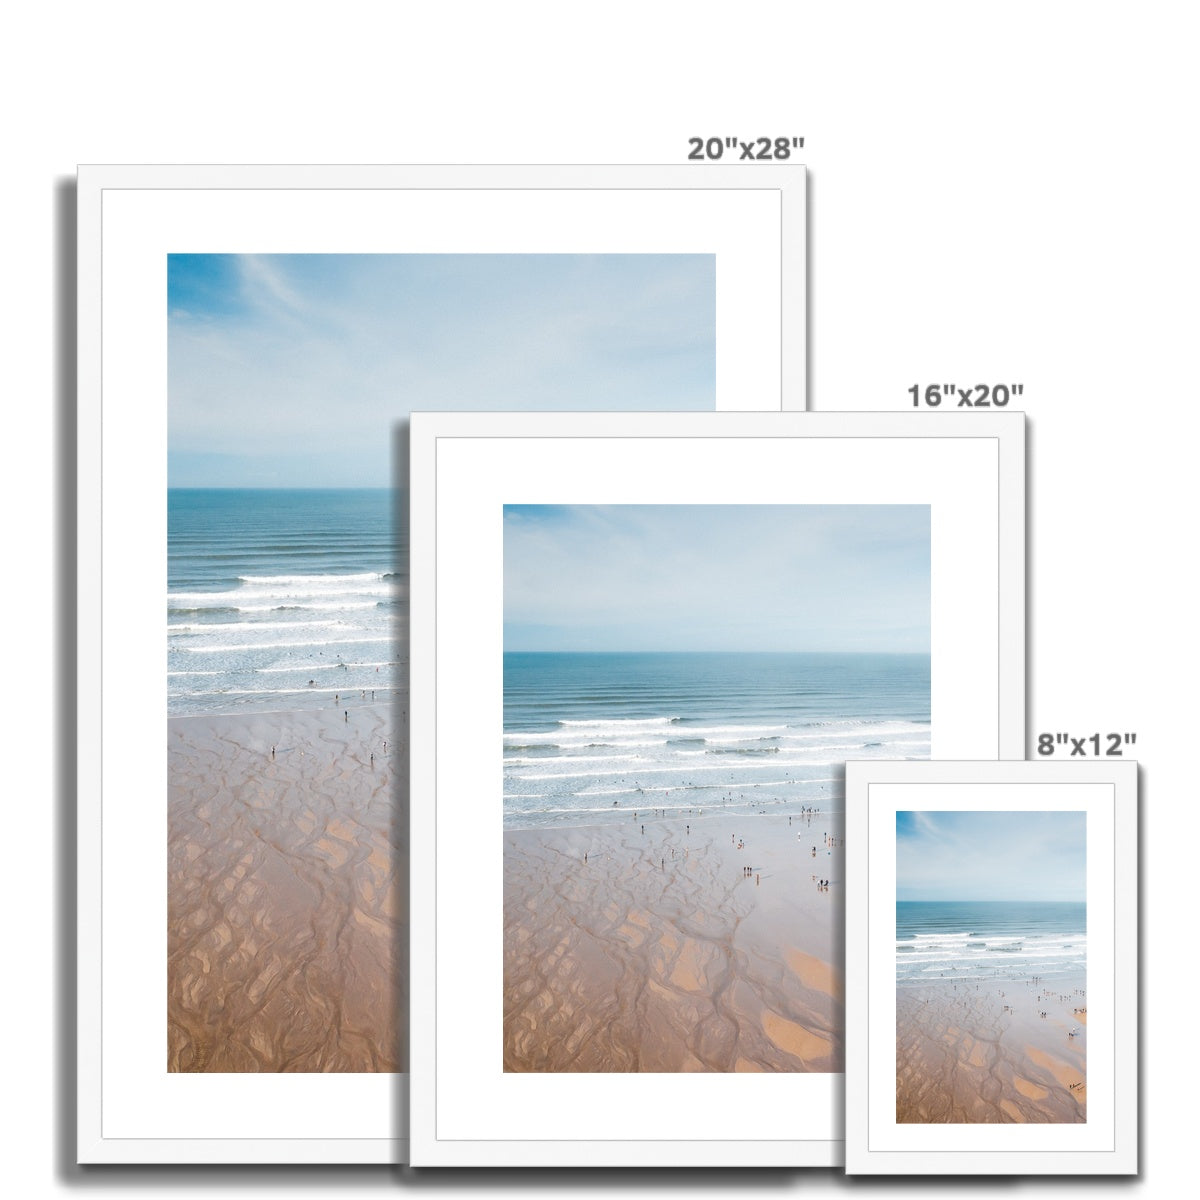 polzeath beach wooden frame sizes